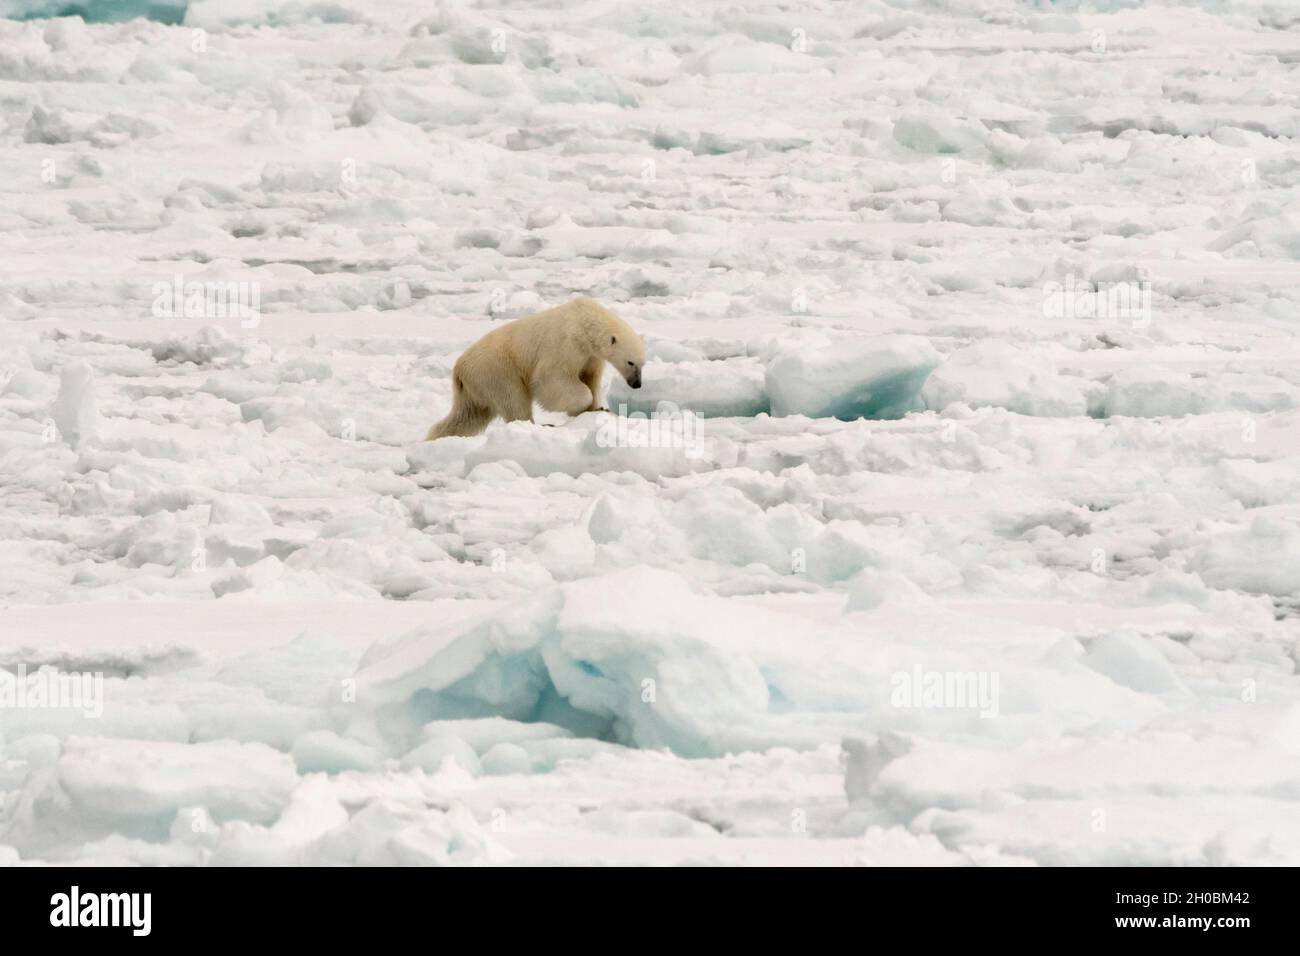 Polar bear (Ursus maritimus), Polar Ice Cap, 81north of Spitsbergen, Norvay. Stock Photo